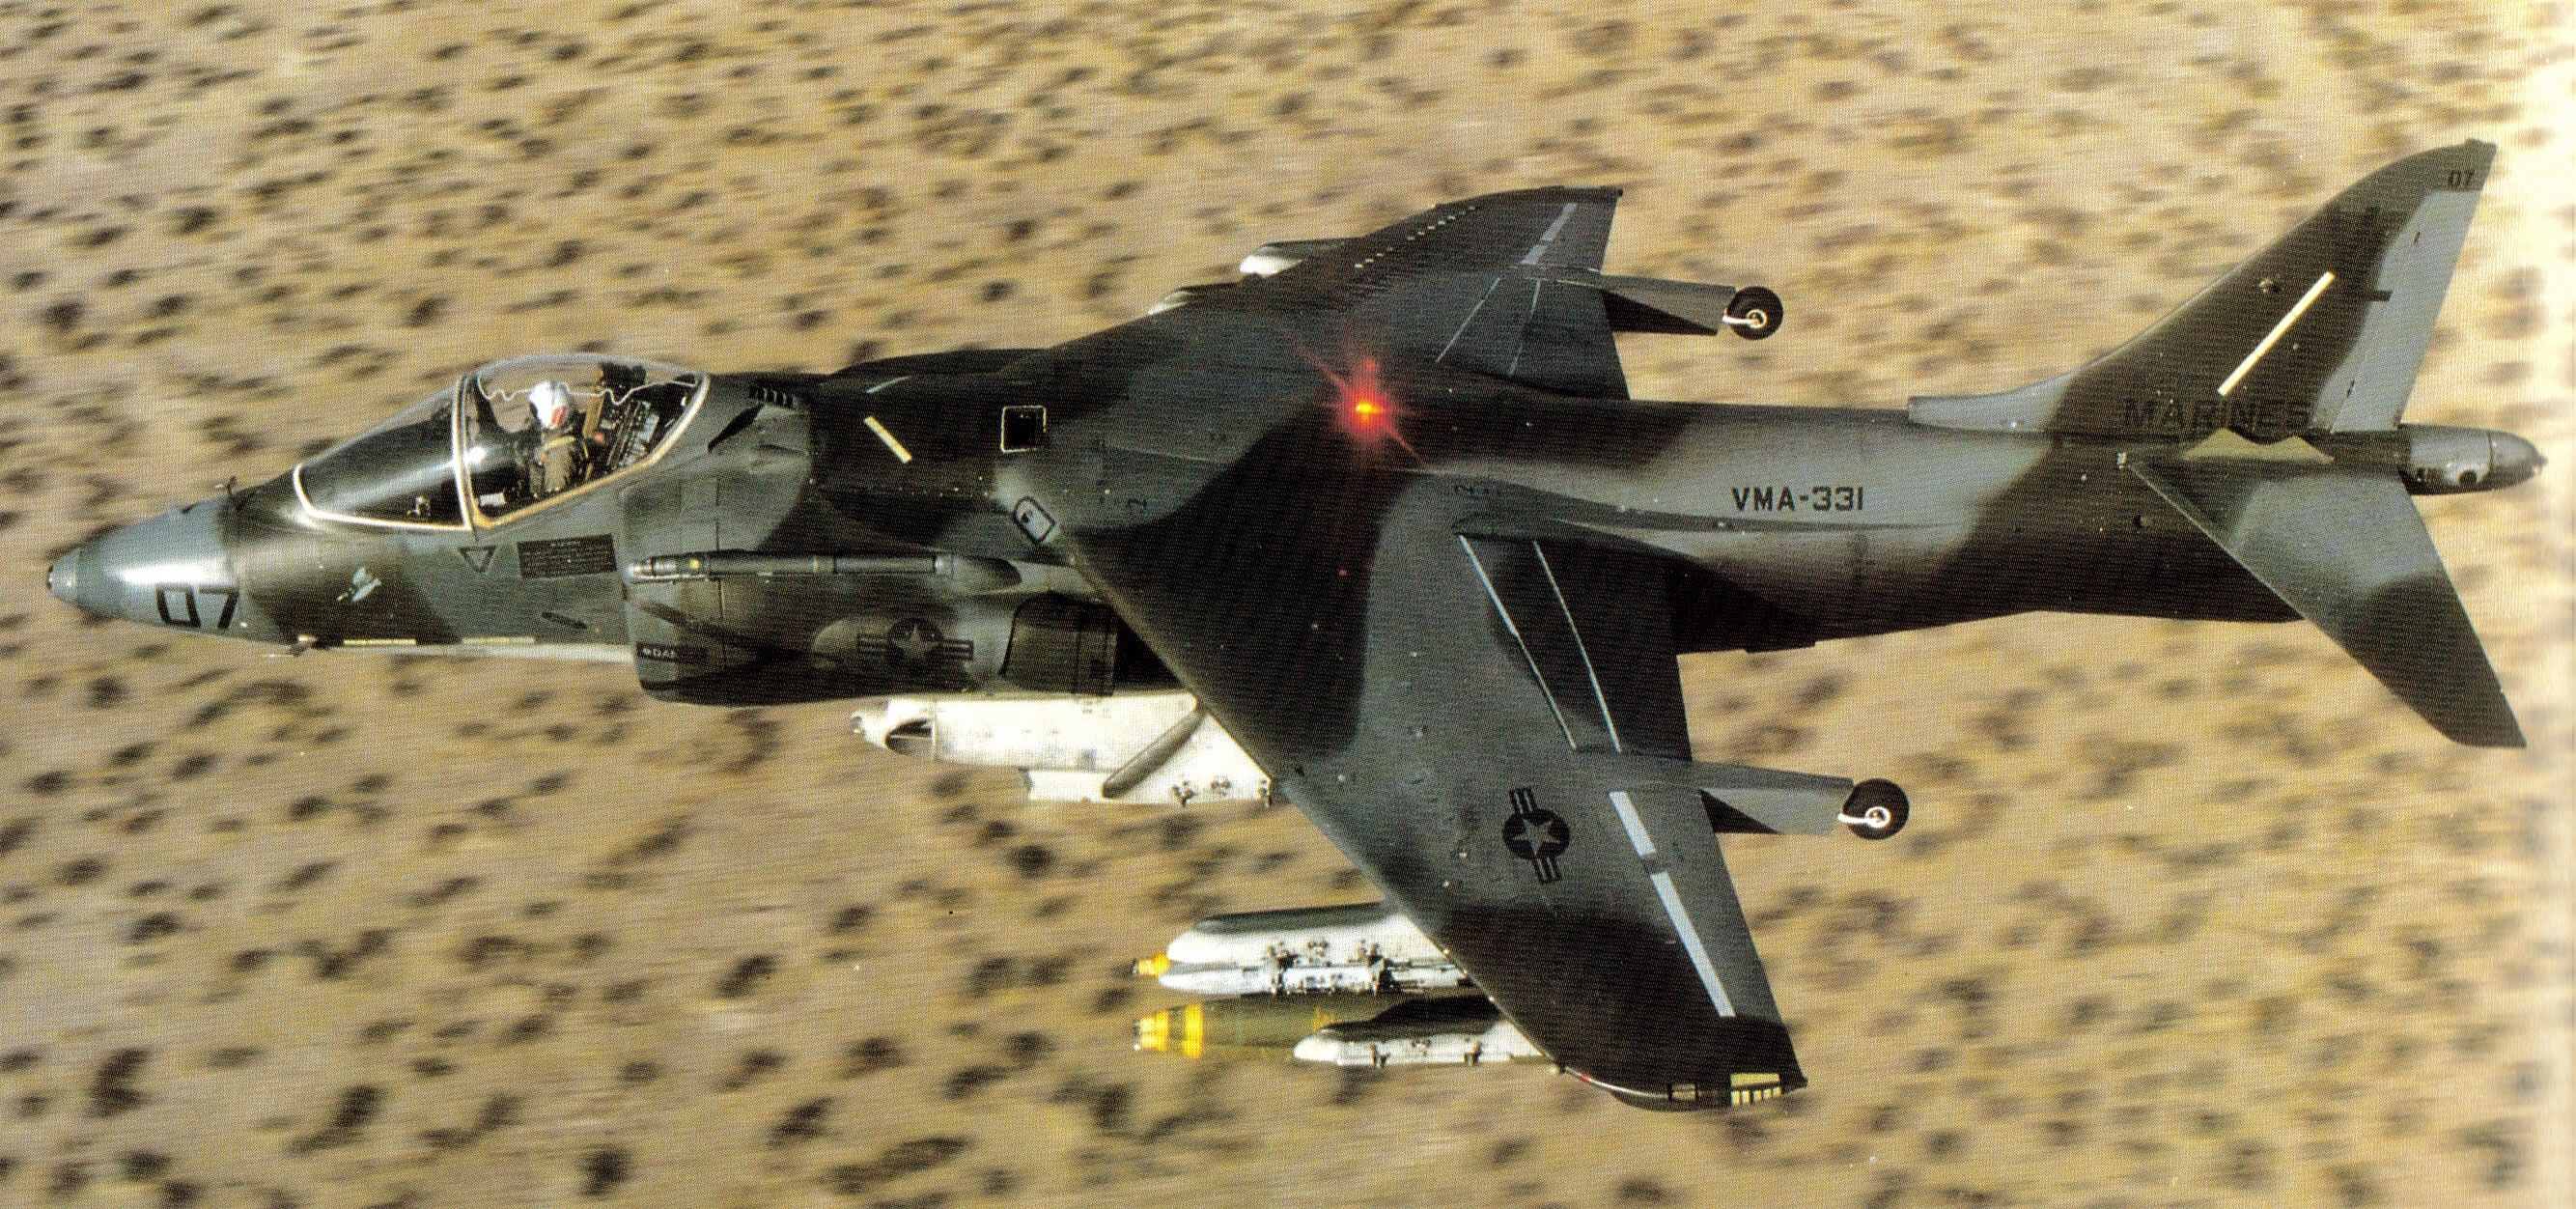 Harrier Jet Wallpaper Desktop Image